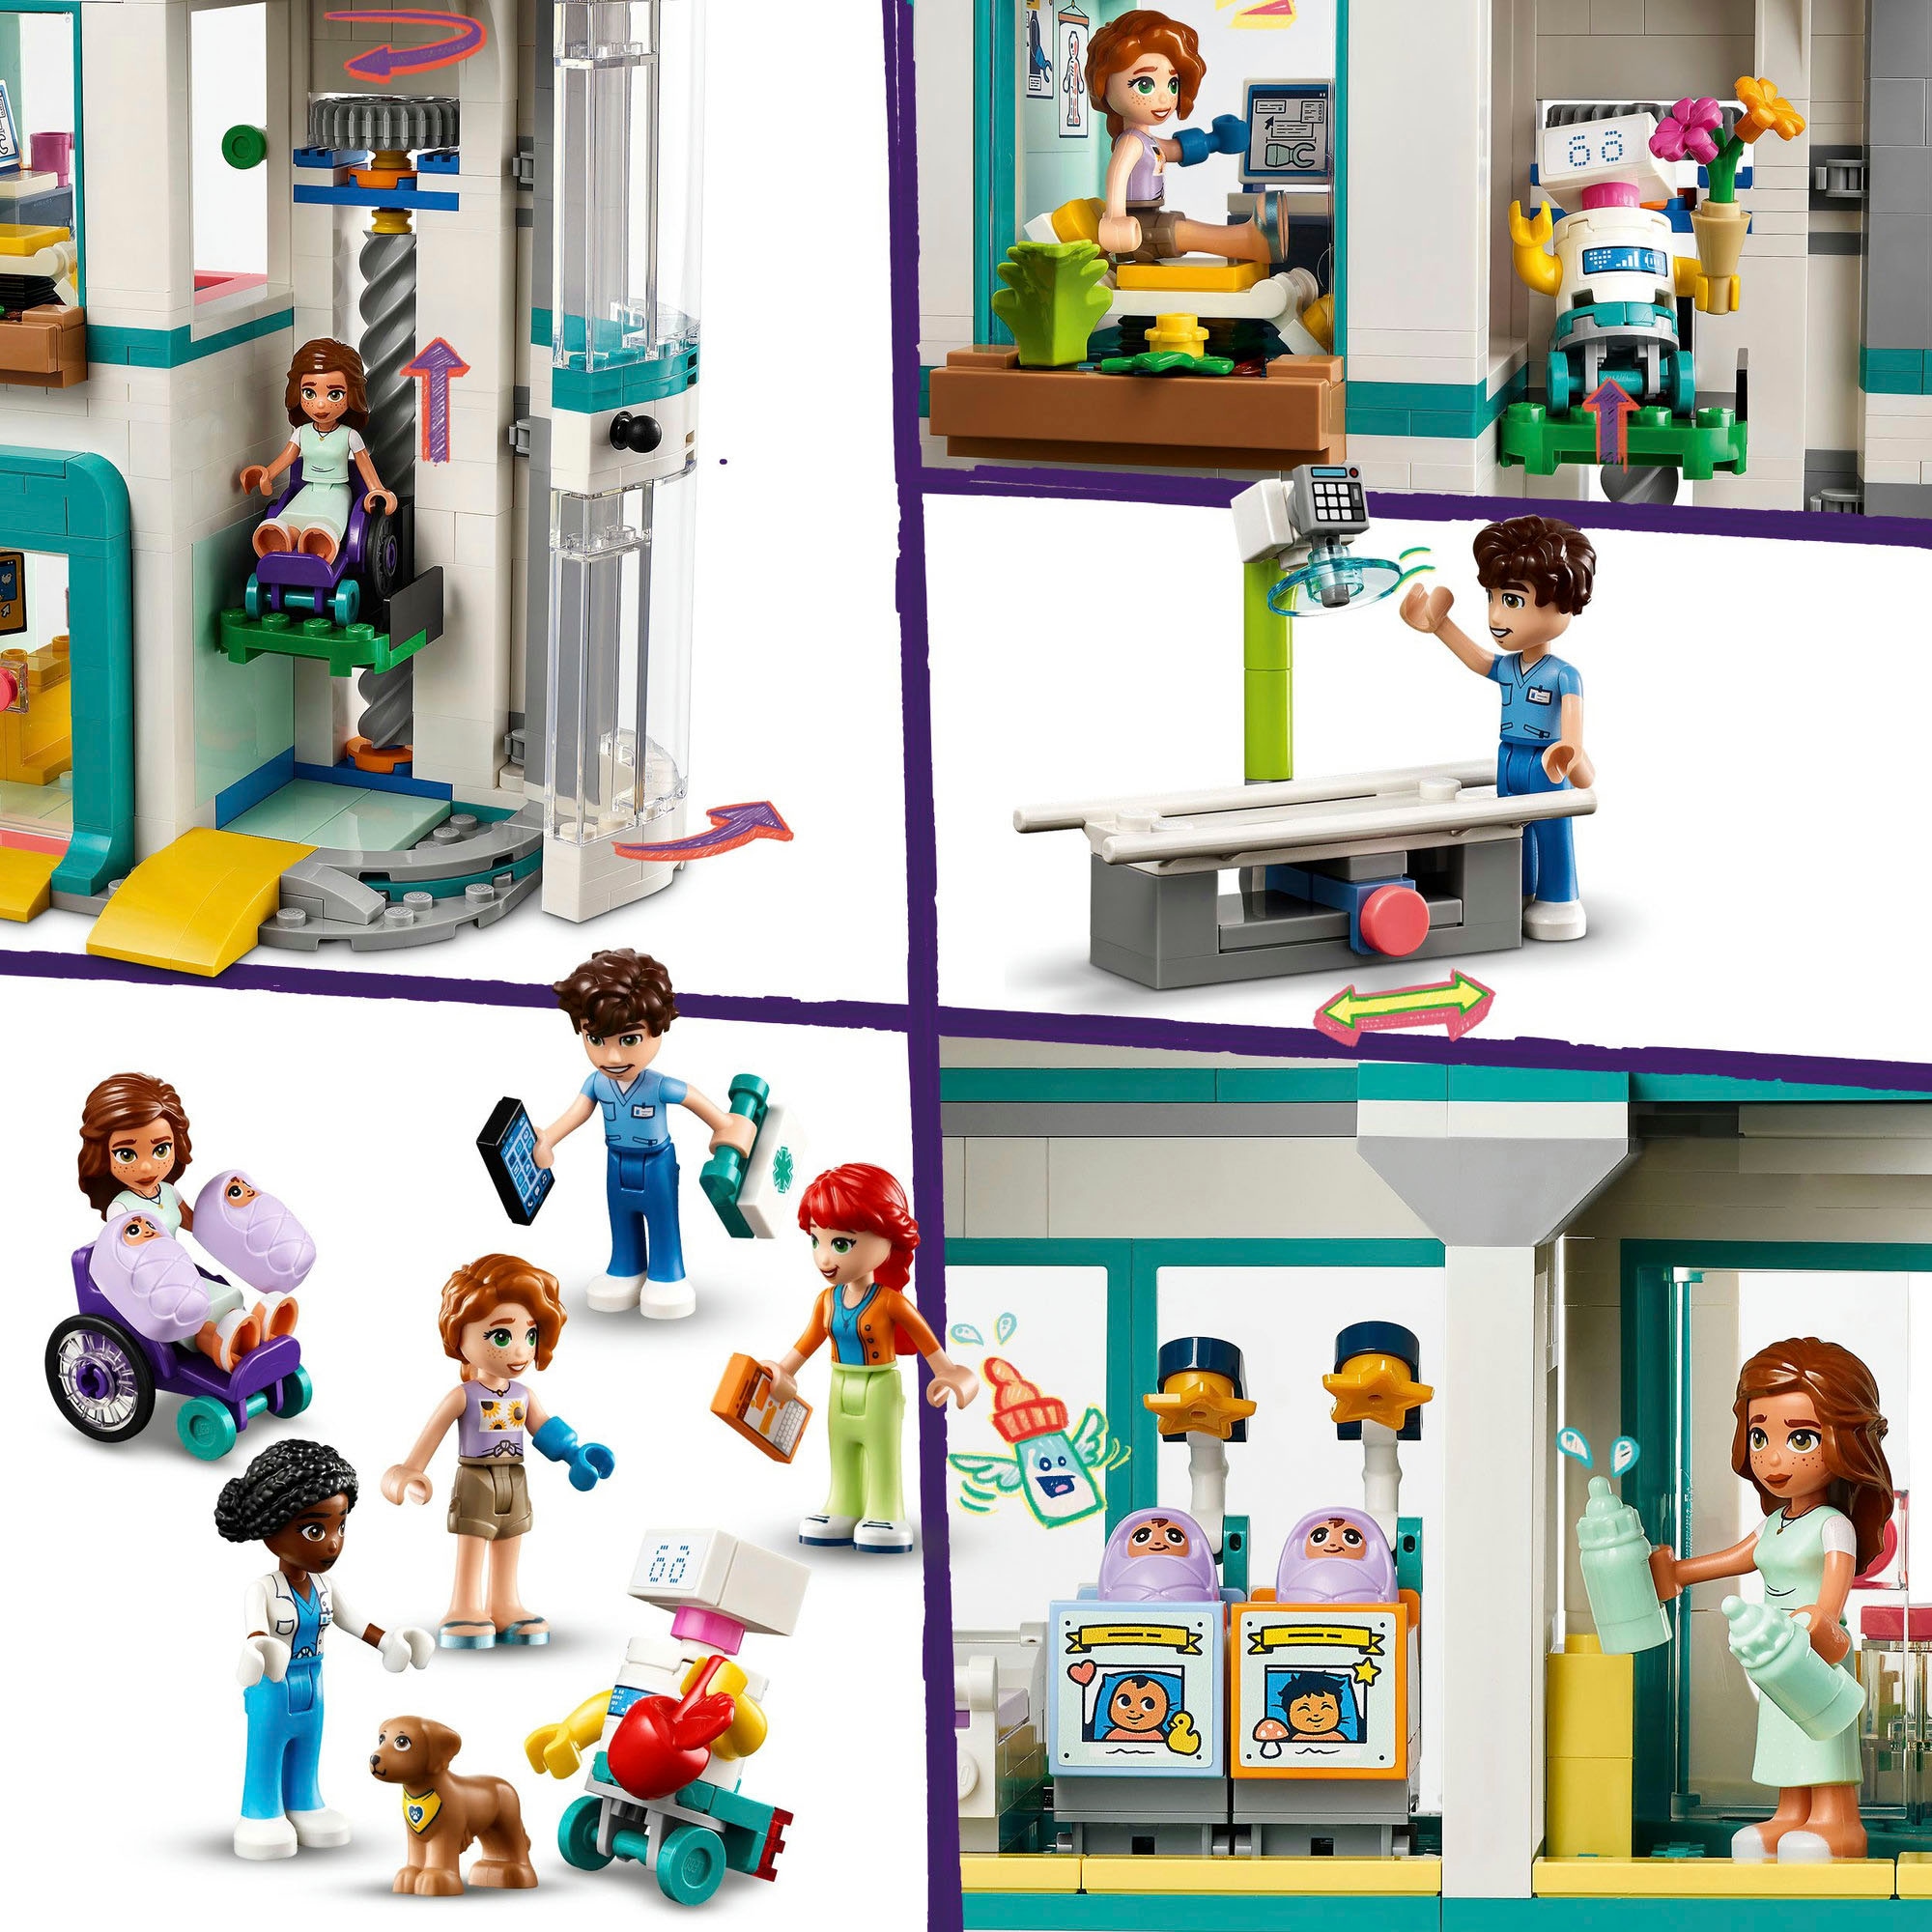 LEGO® Konstruktionsspielsteine »Heartlake City Krankenhaus (42621), LEGO Friends«, (1045 St.), Made in Europe